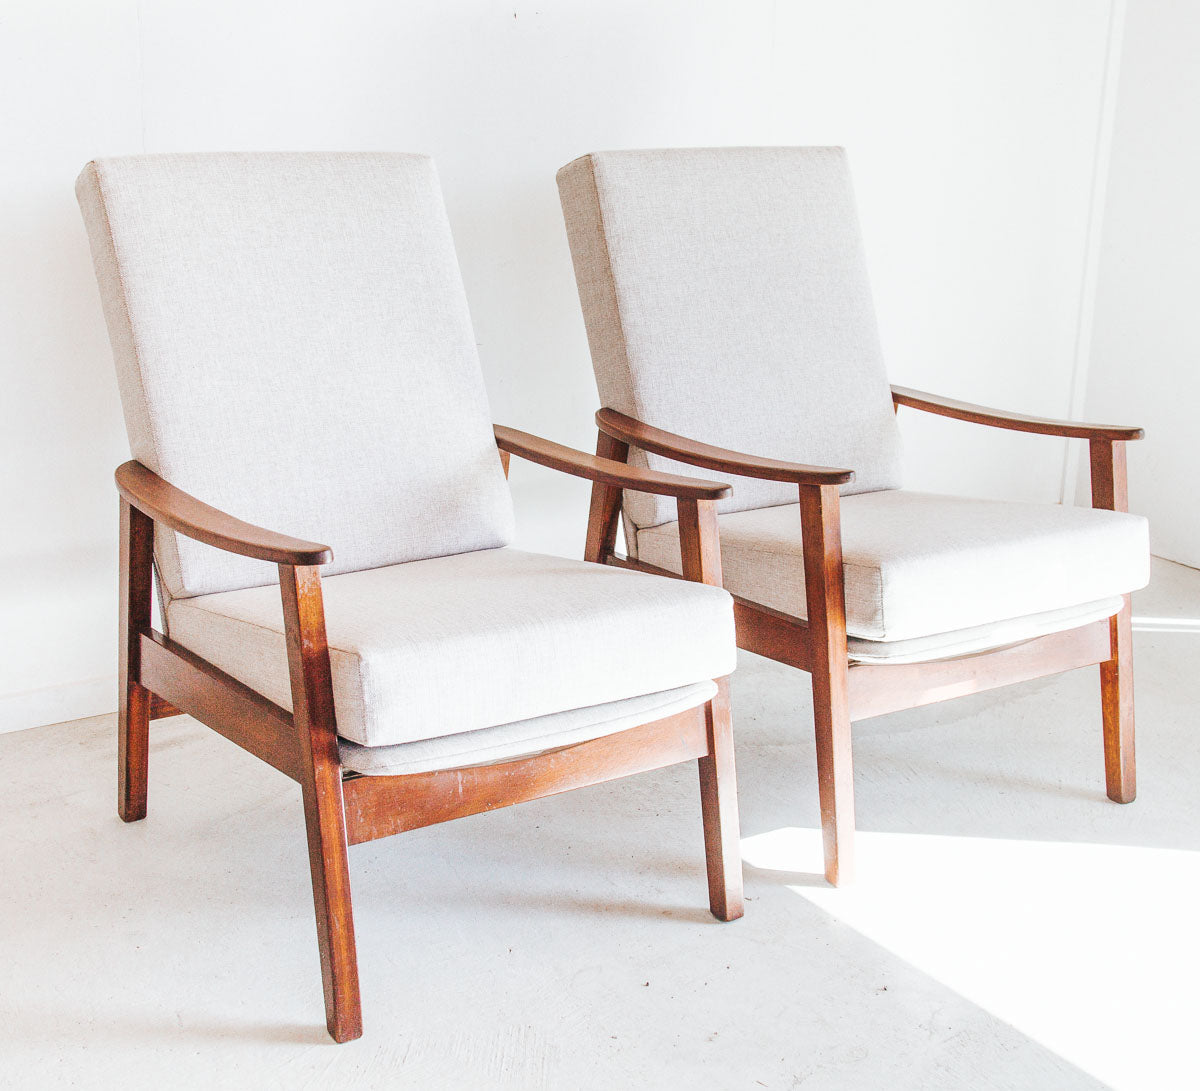 vintage mid century reclining armchair nz don furniture, fred lowen design ski jump wooden arms